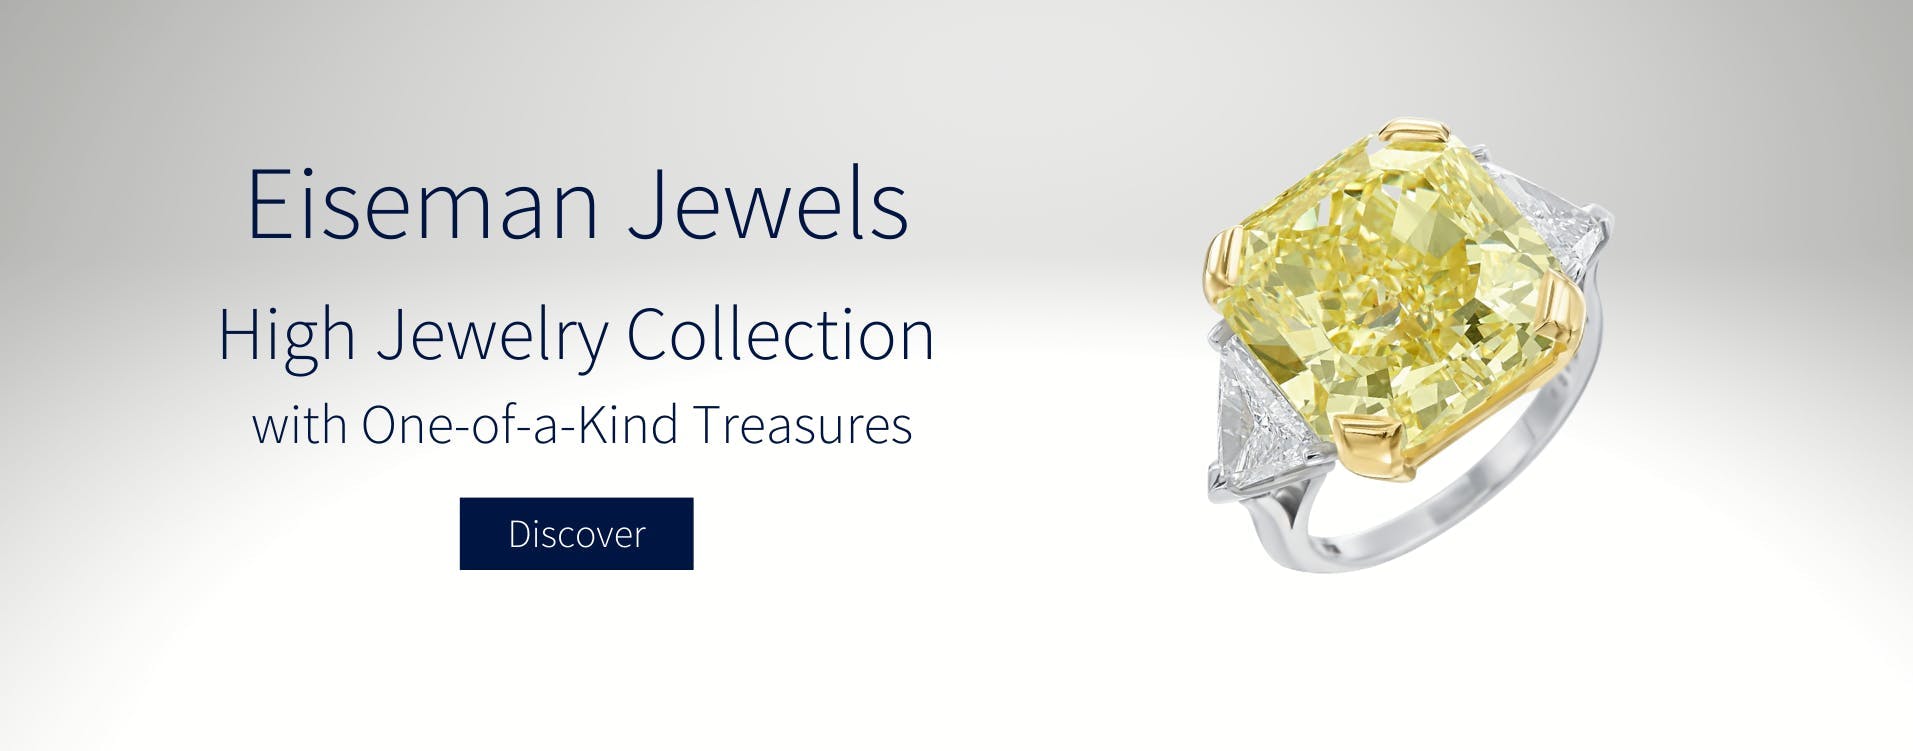 Eiseman Jewels Vault Collection